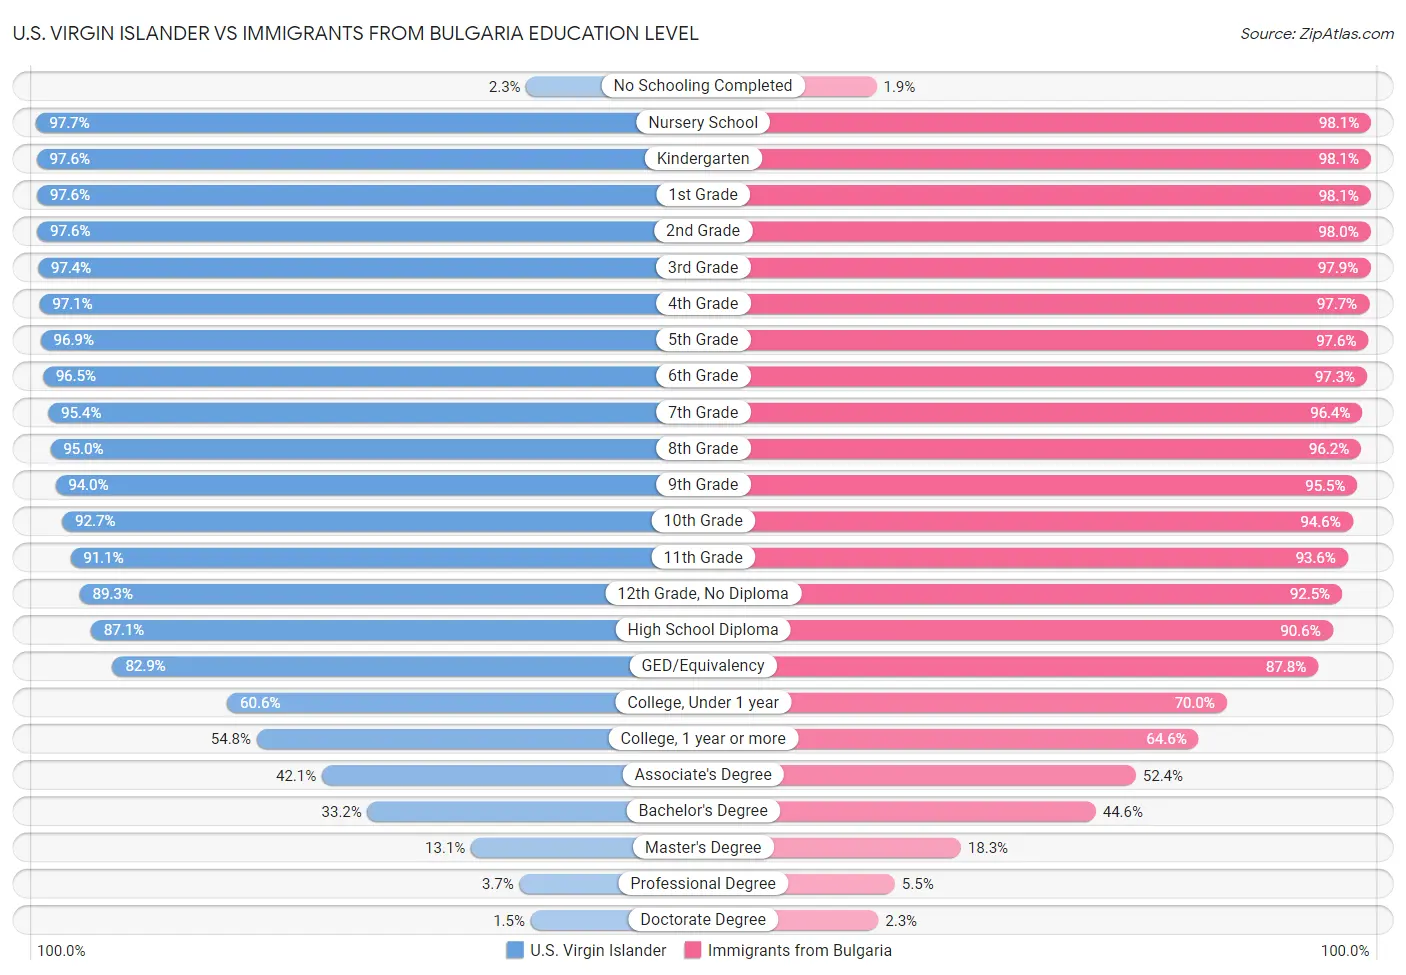 U.S. Virgin Islander vs Immigrants from Bulgaria Education Level